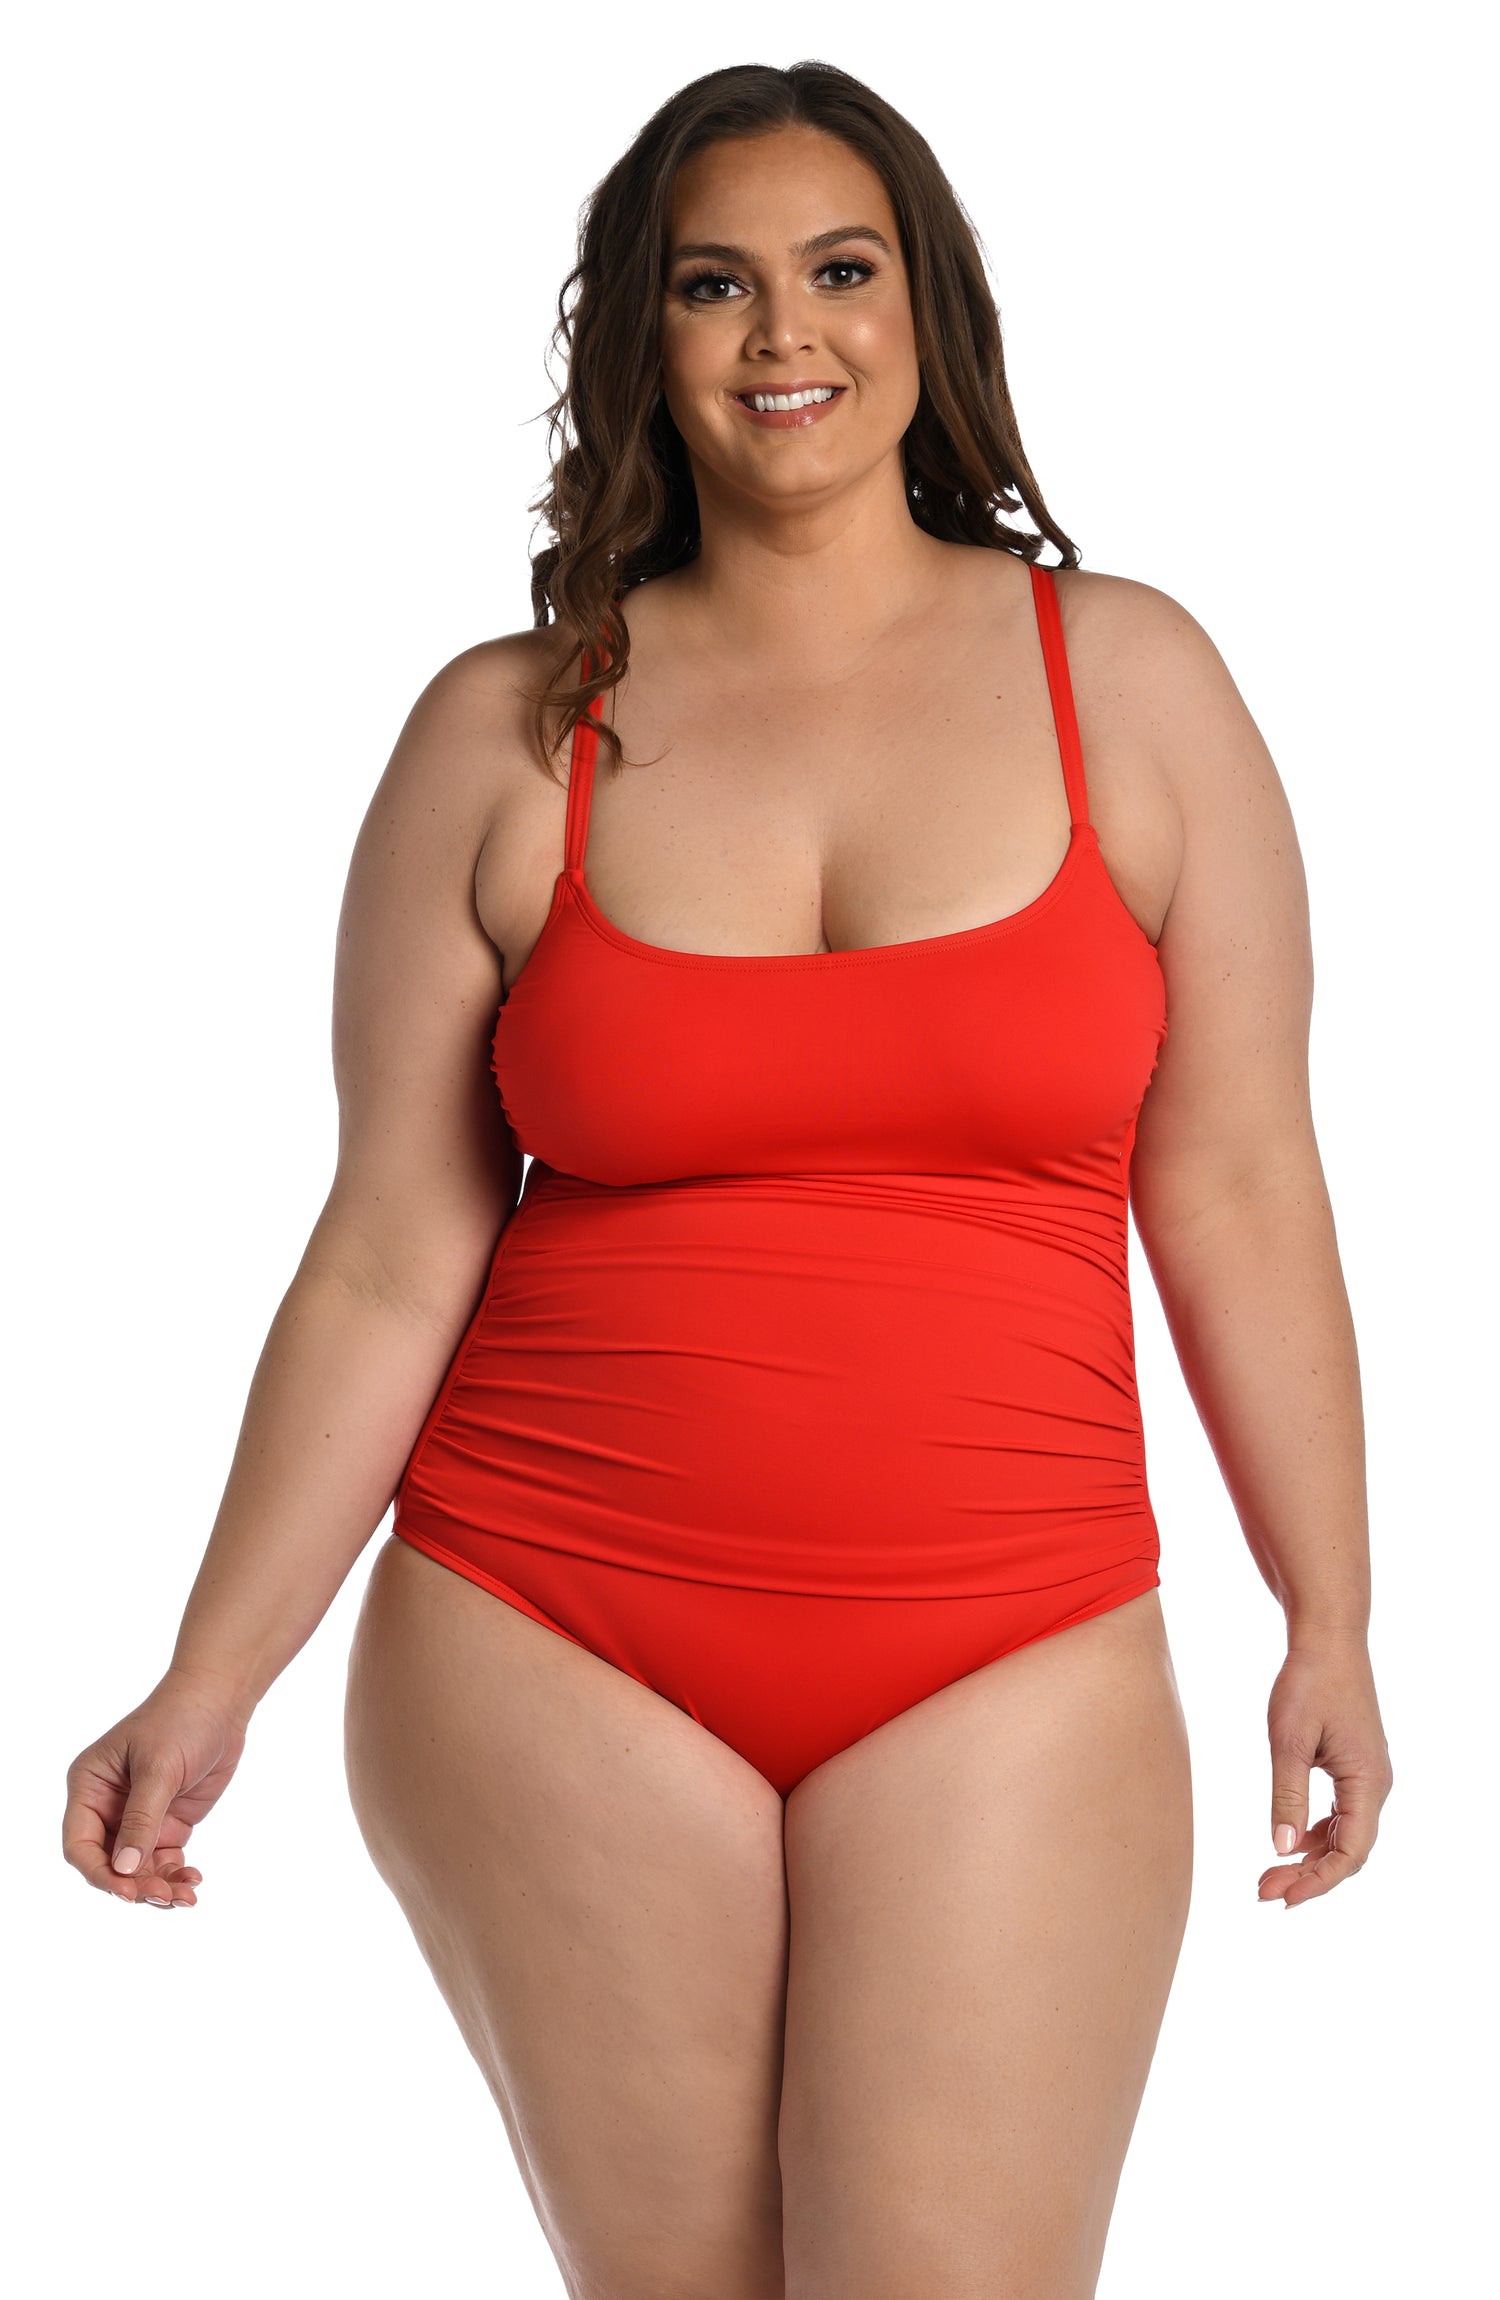 Cherry Print Scoop Neck Red and White Plus Size Bikini Sets (Women's Plus)  